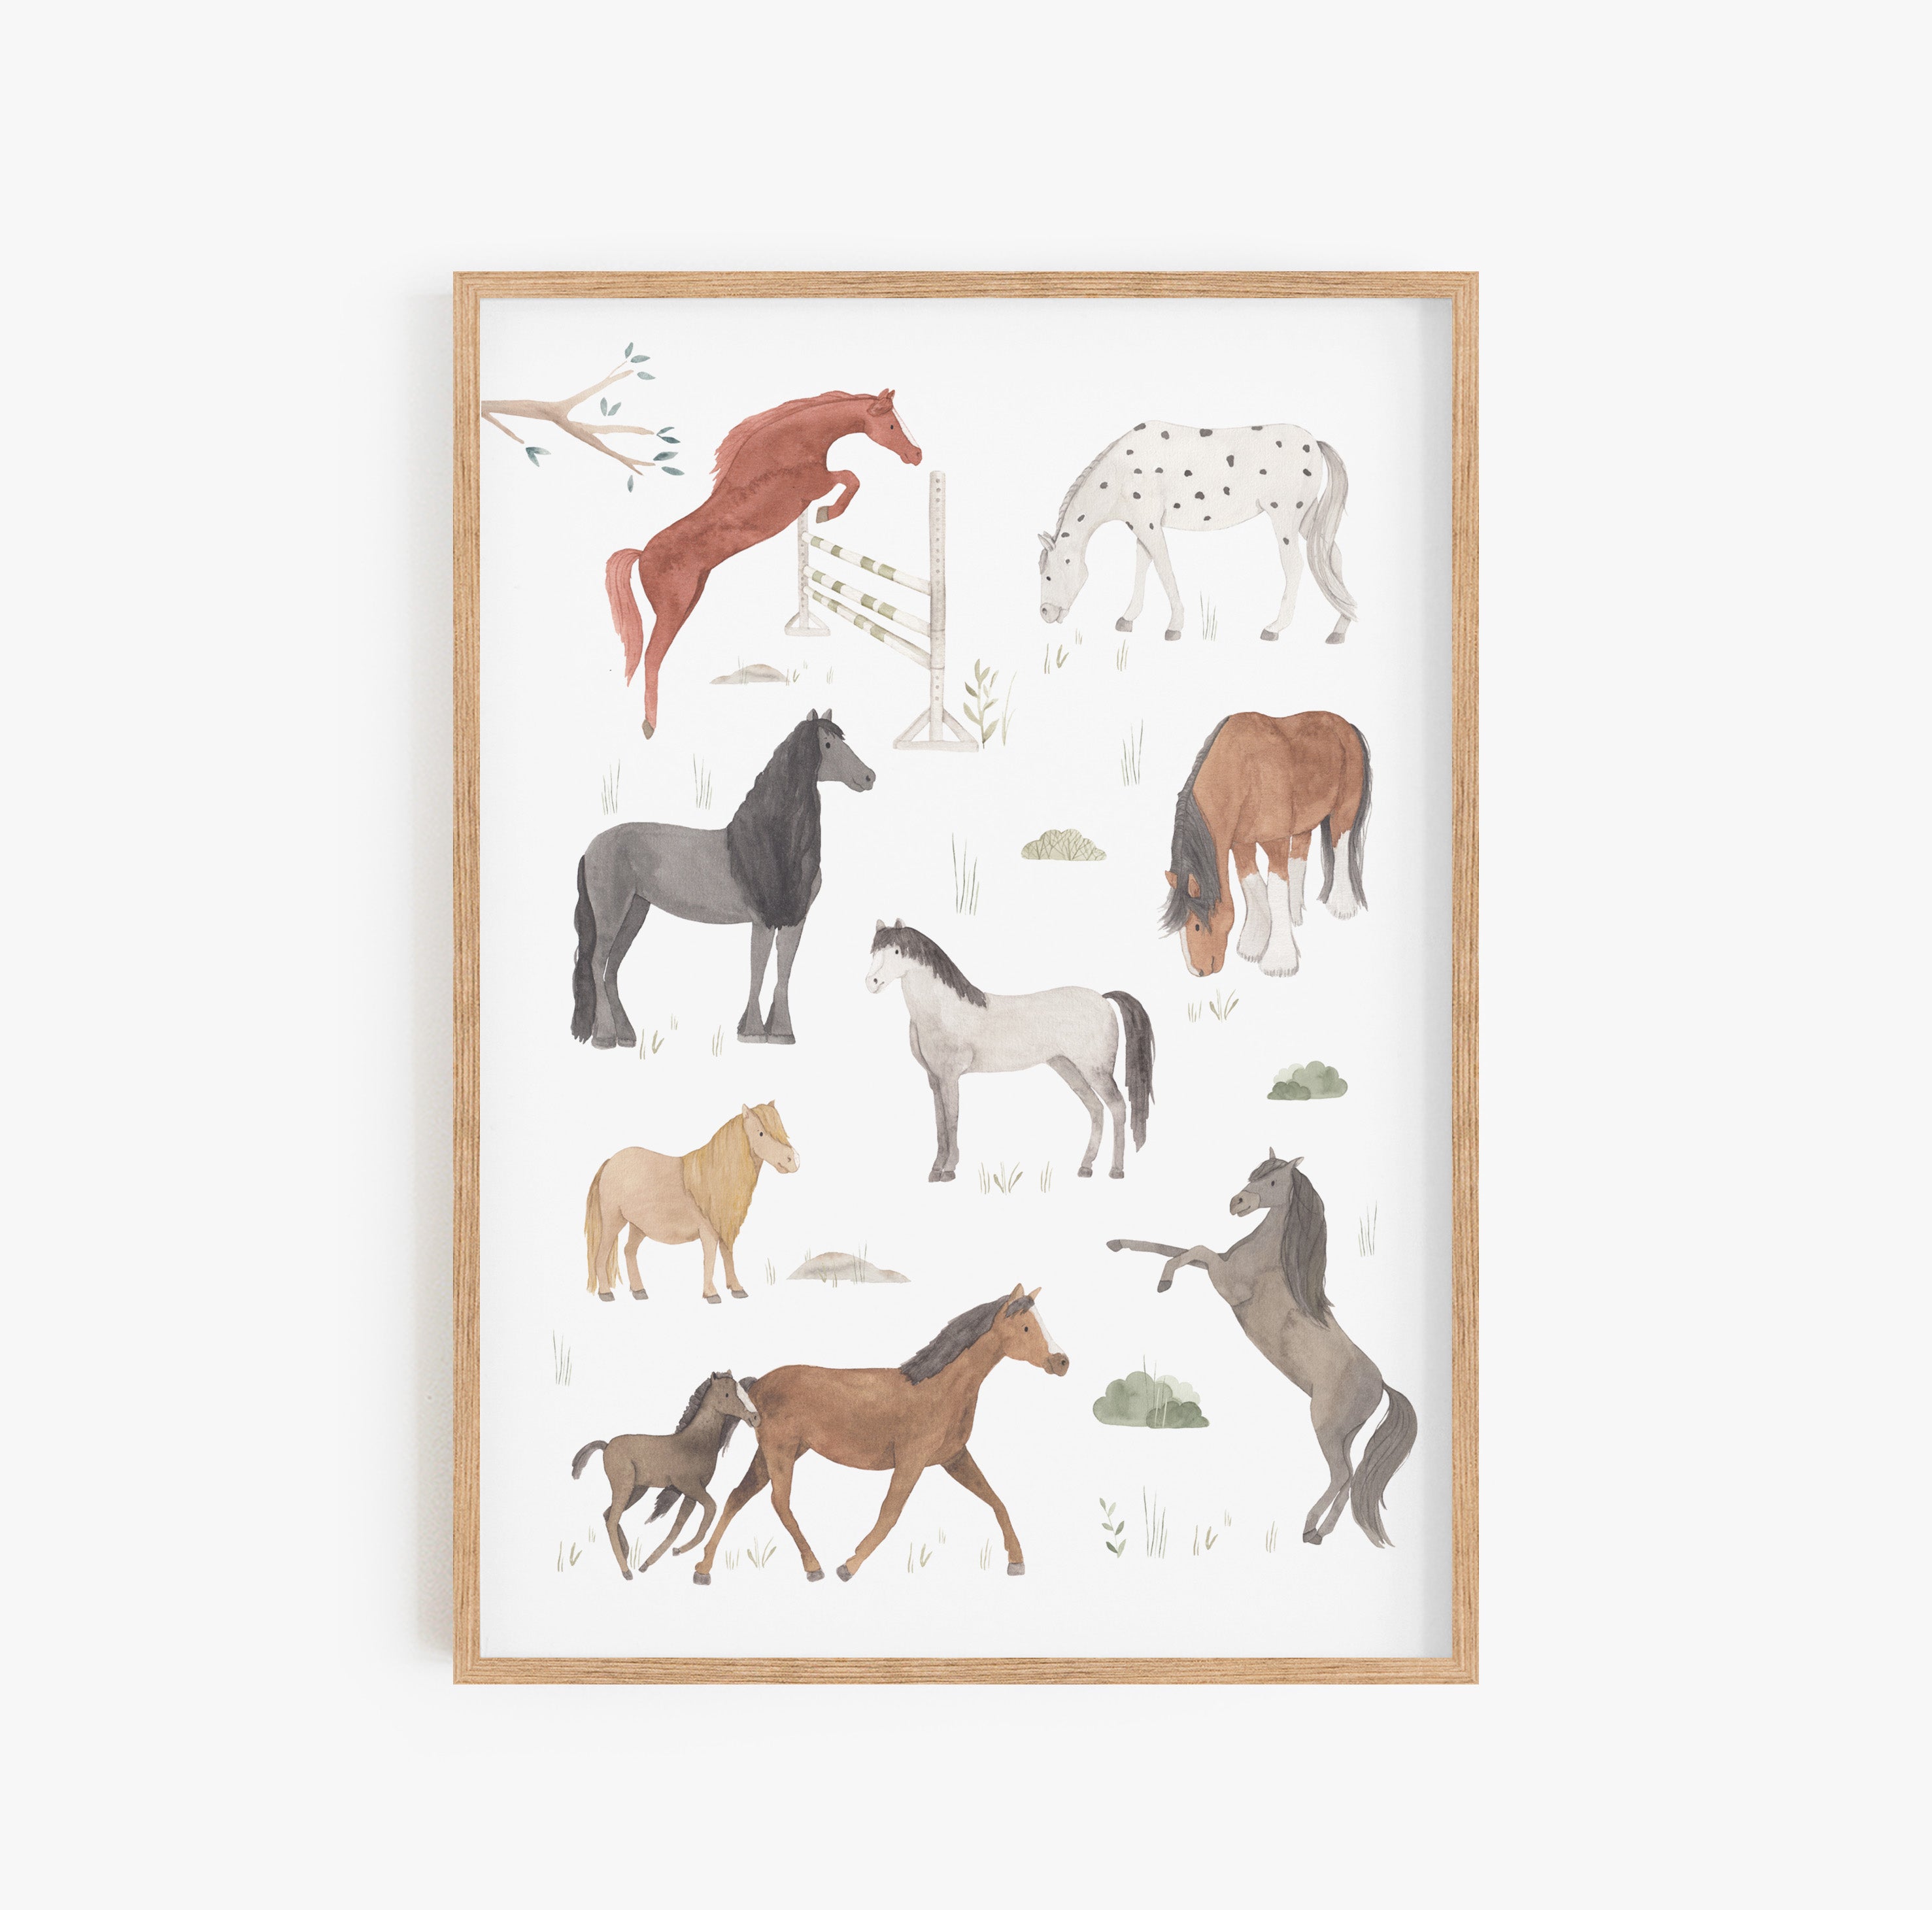 Poster/Kunstdruck - Pferde